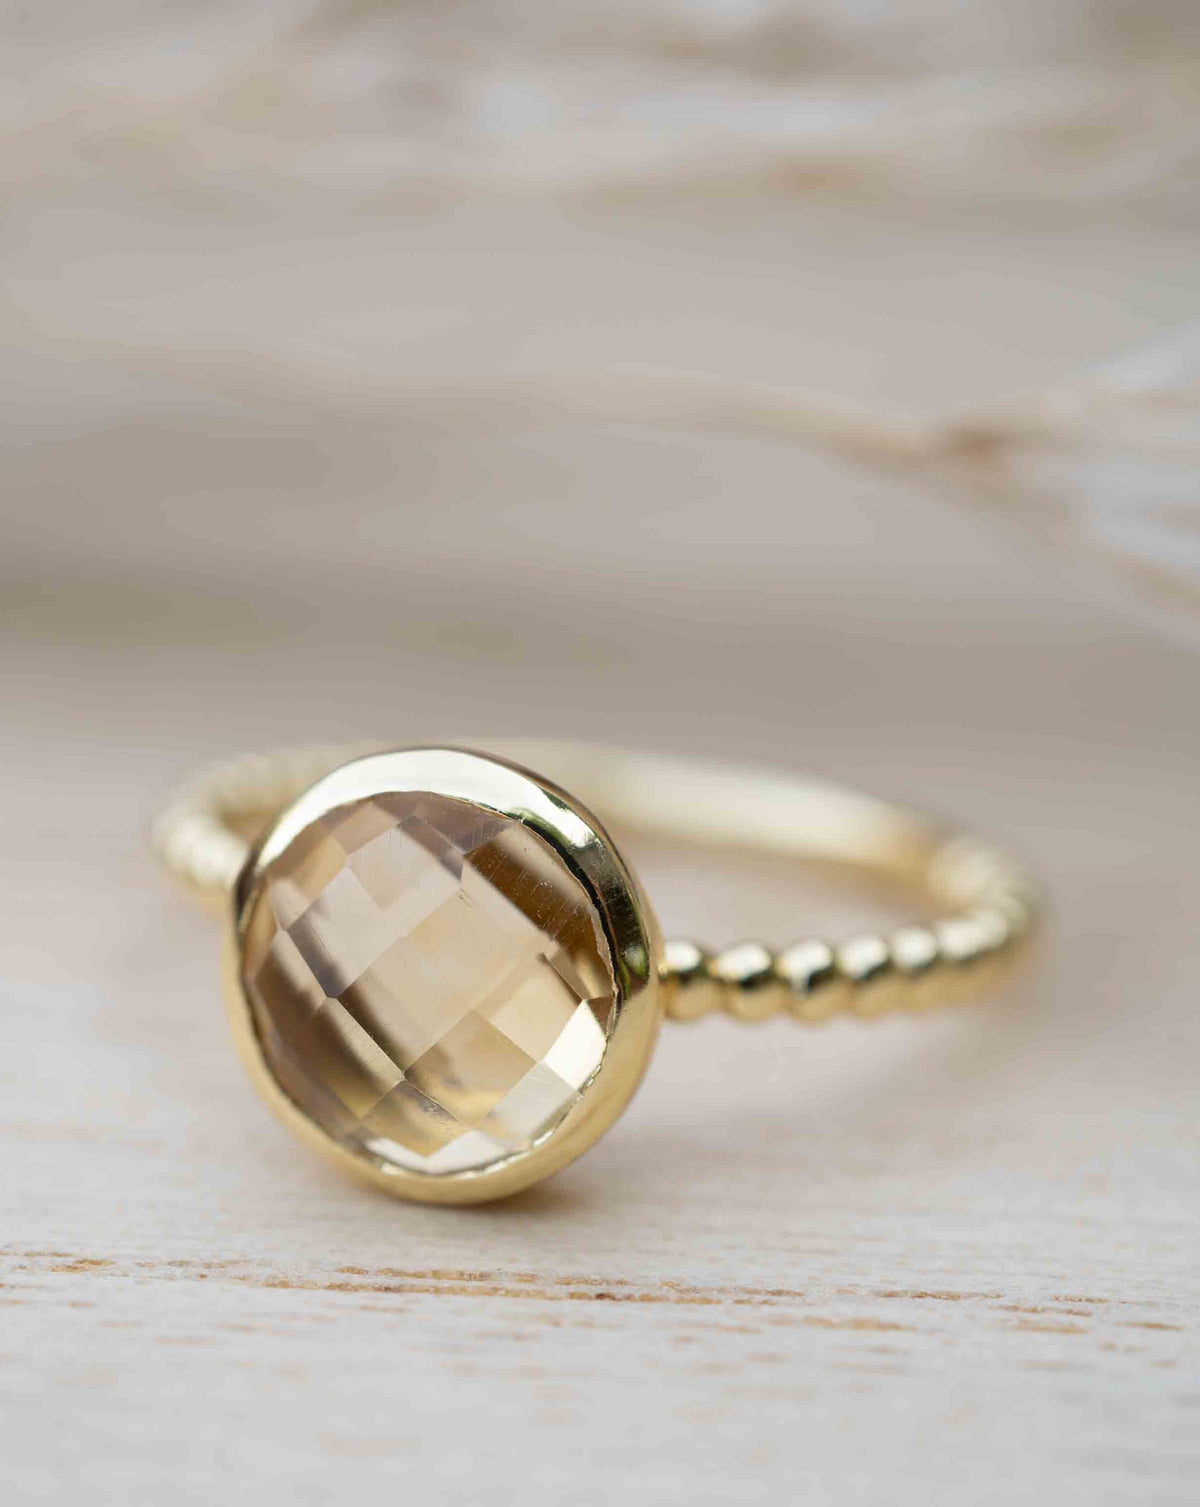 Yellow Topaz hydro Gold Plated Ring * Wedding * Engagement * Handmade * Statement * Bycila *Boho *Hippie * Bridal * Bridesmaid